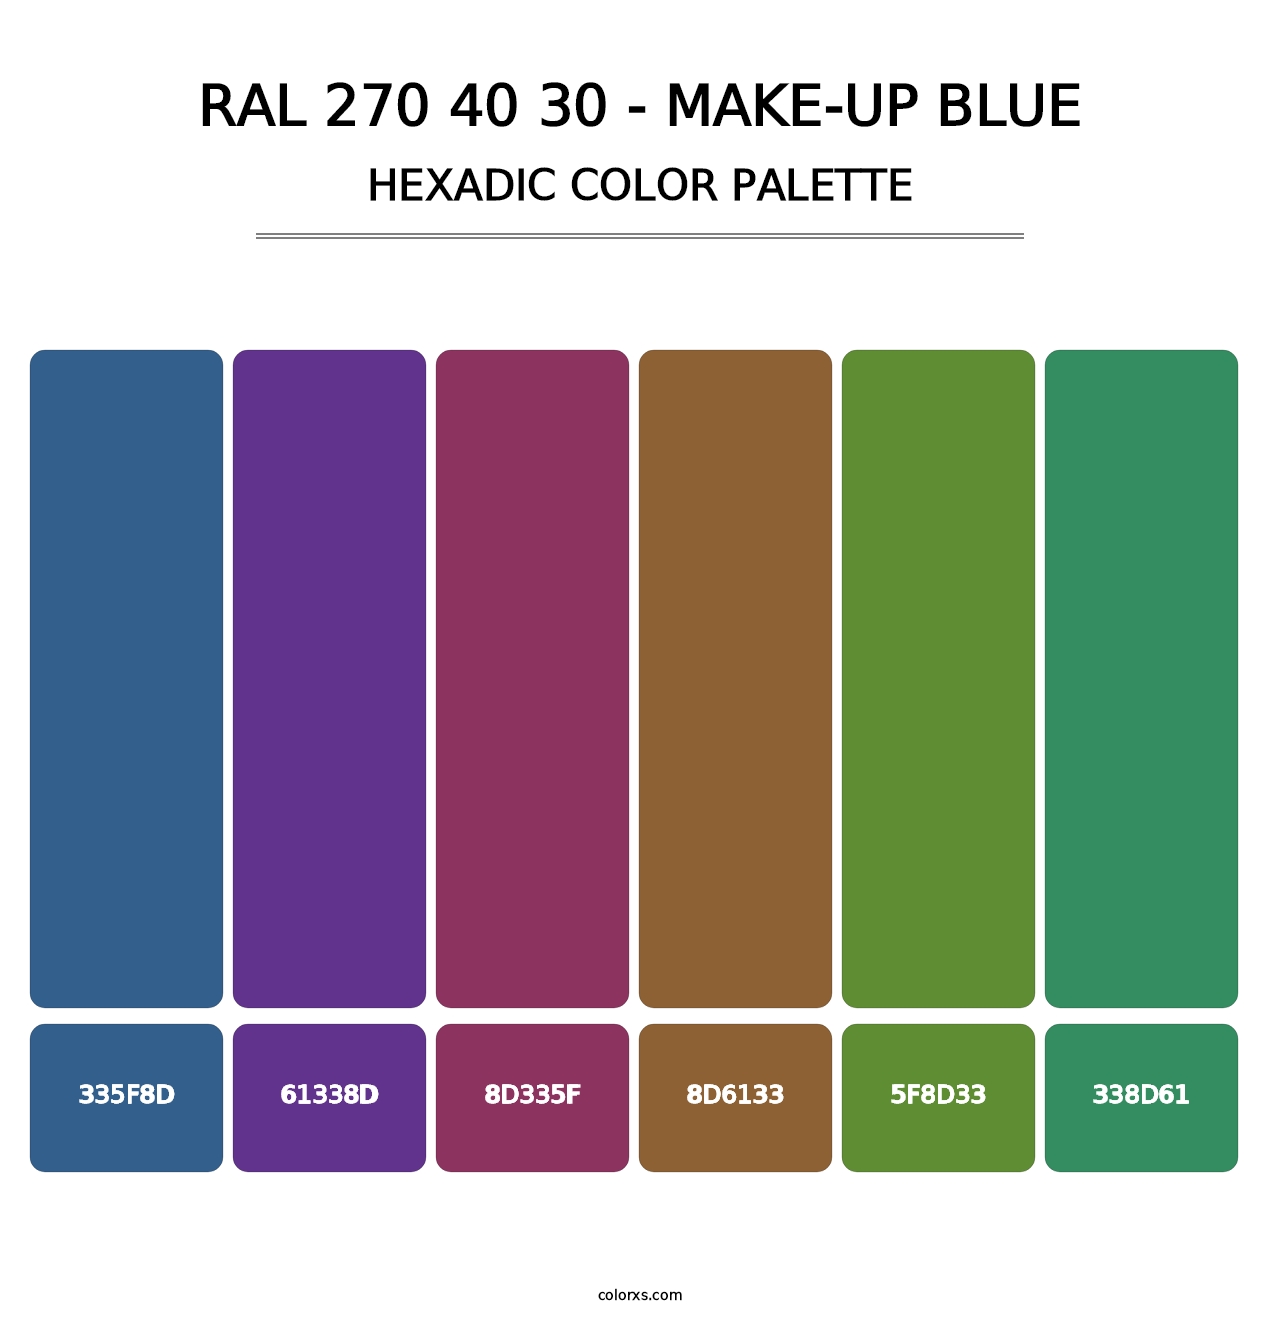 RAL 270 40 30 - Make-Up Blue - Hexadic Color Palette